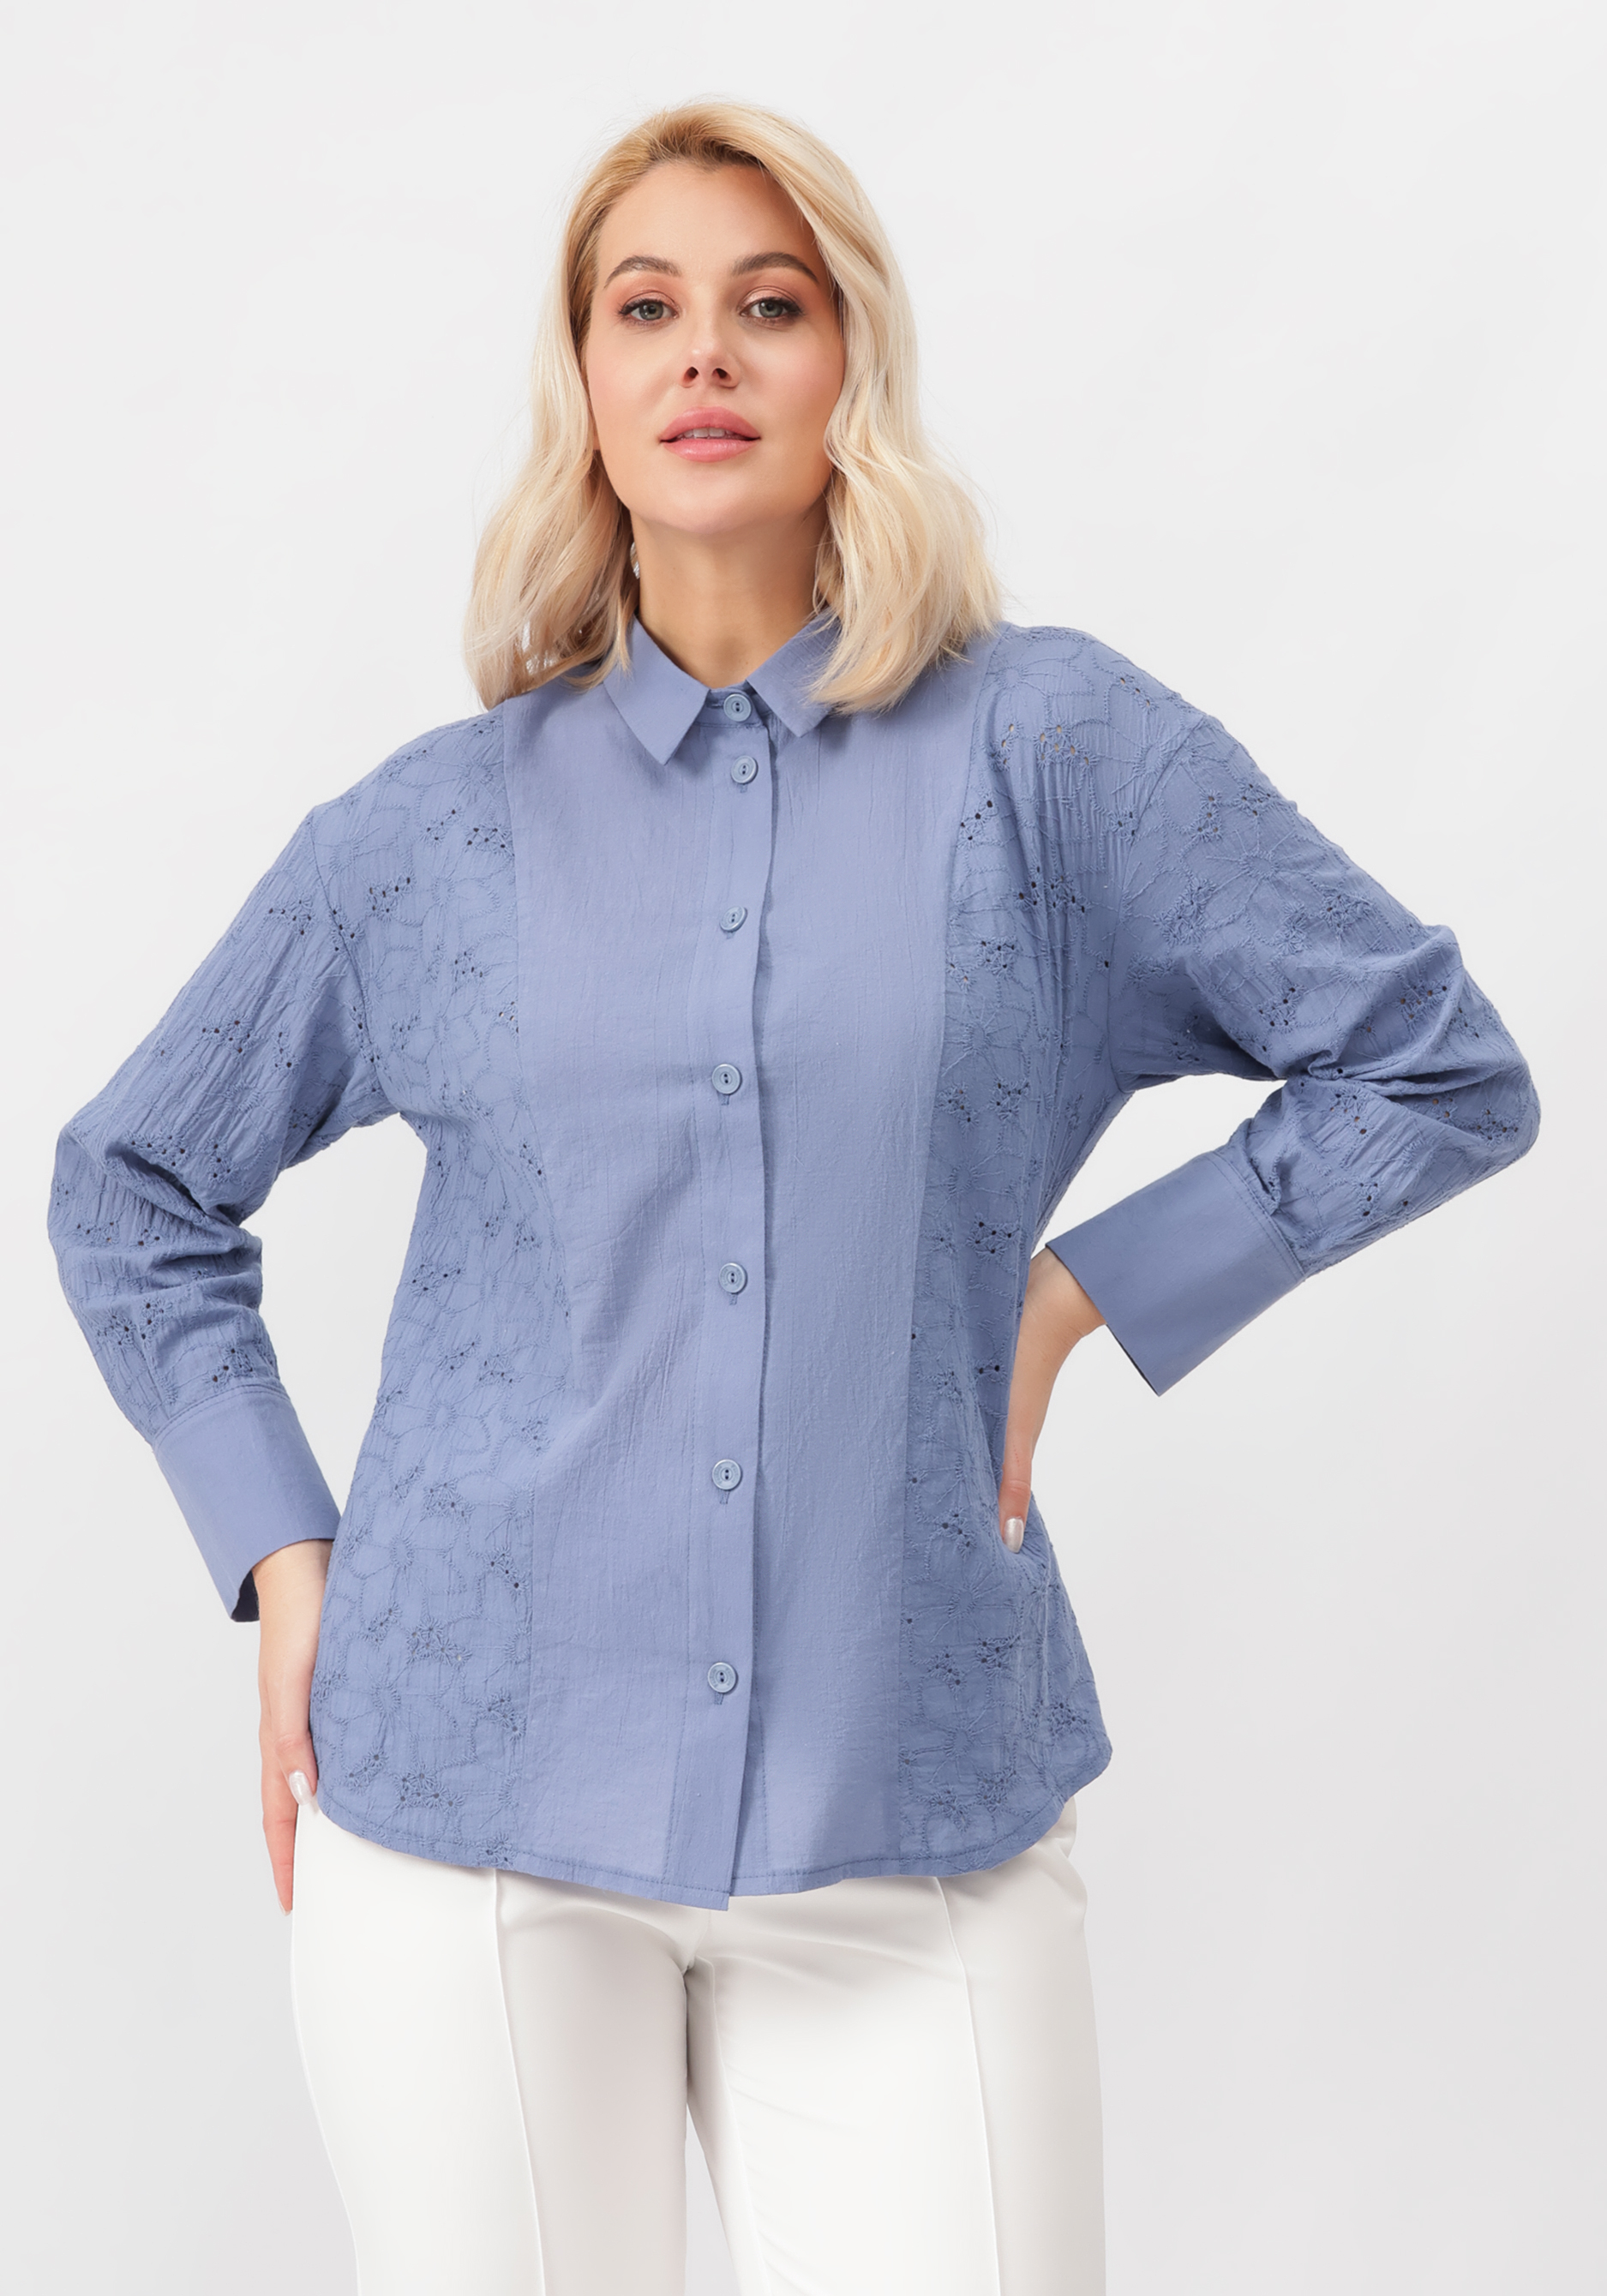 Рубашка из комбинированной ткани и кружева Mio Imperatrice, цвет бежевый, размер 58